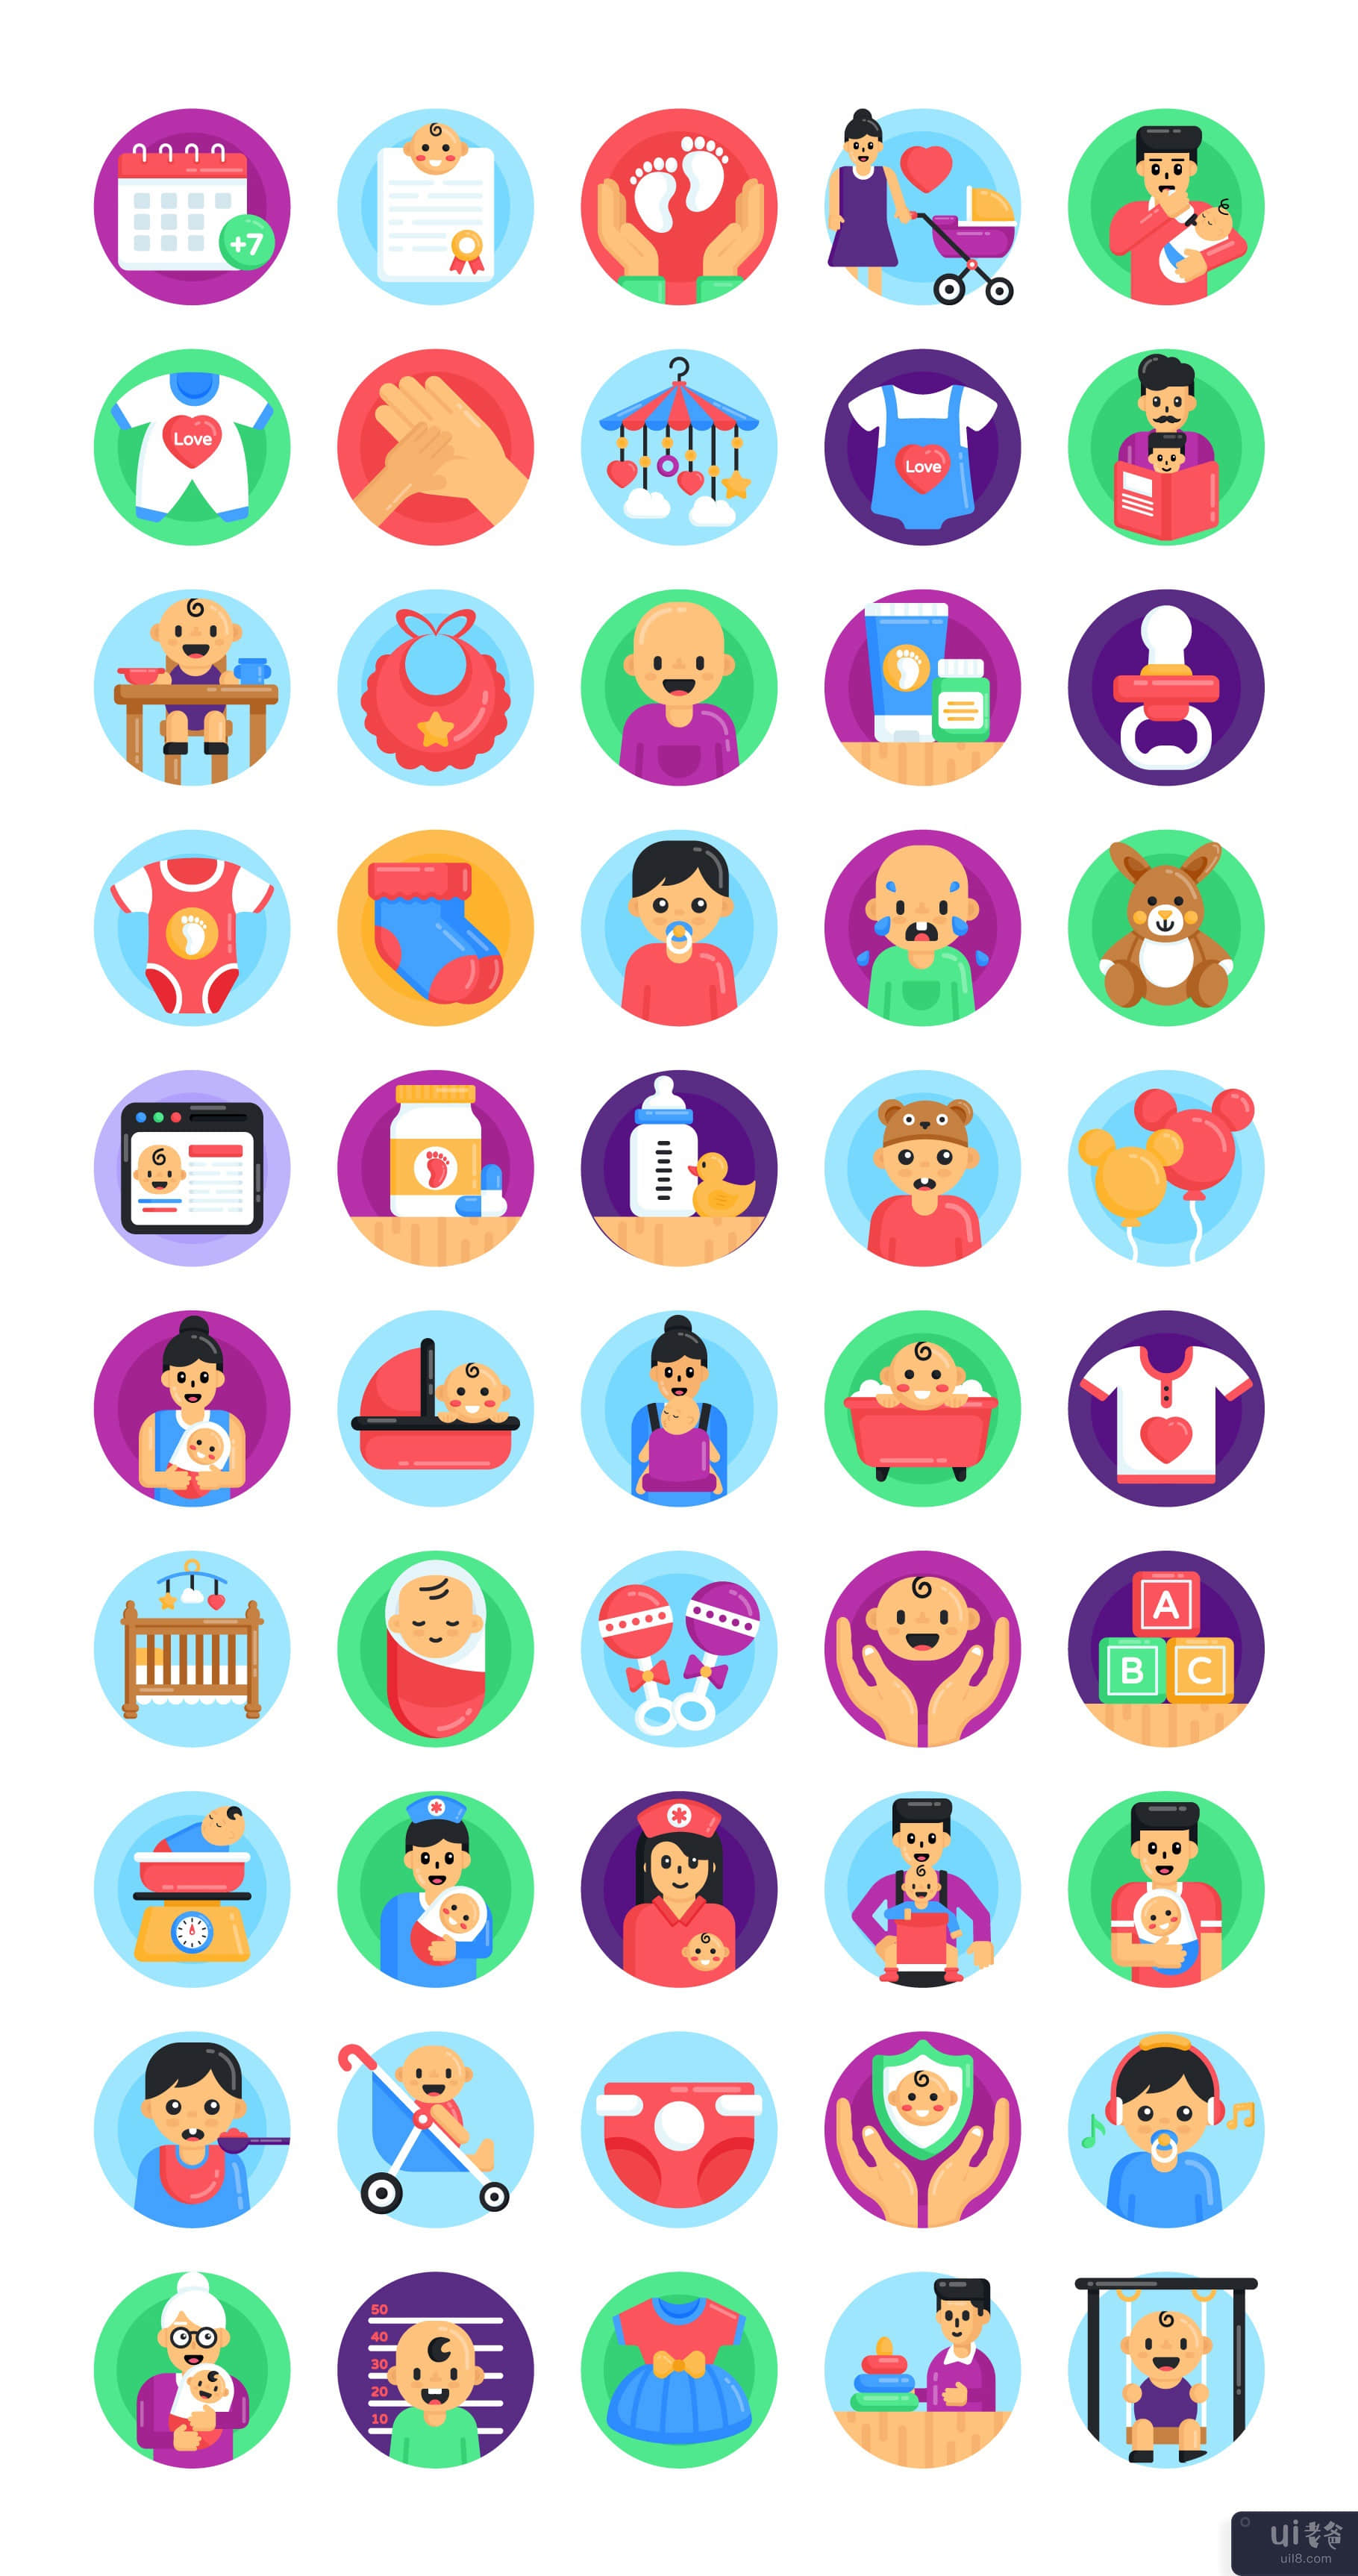 婴儿护理图标-50 个圆形矢量图标(Baby Care Icons - 50 Round Vector Icons)插图